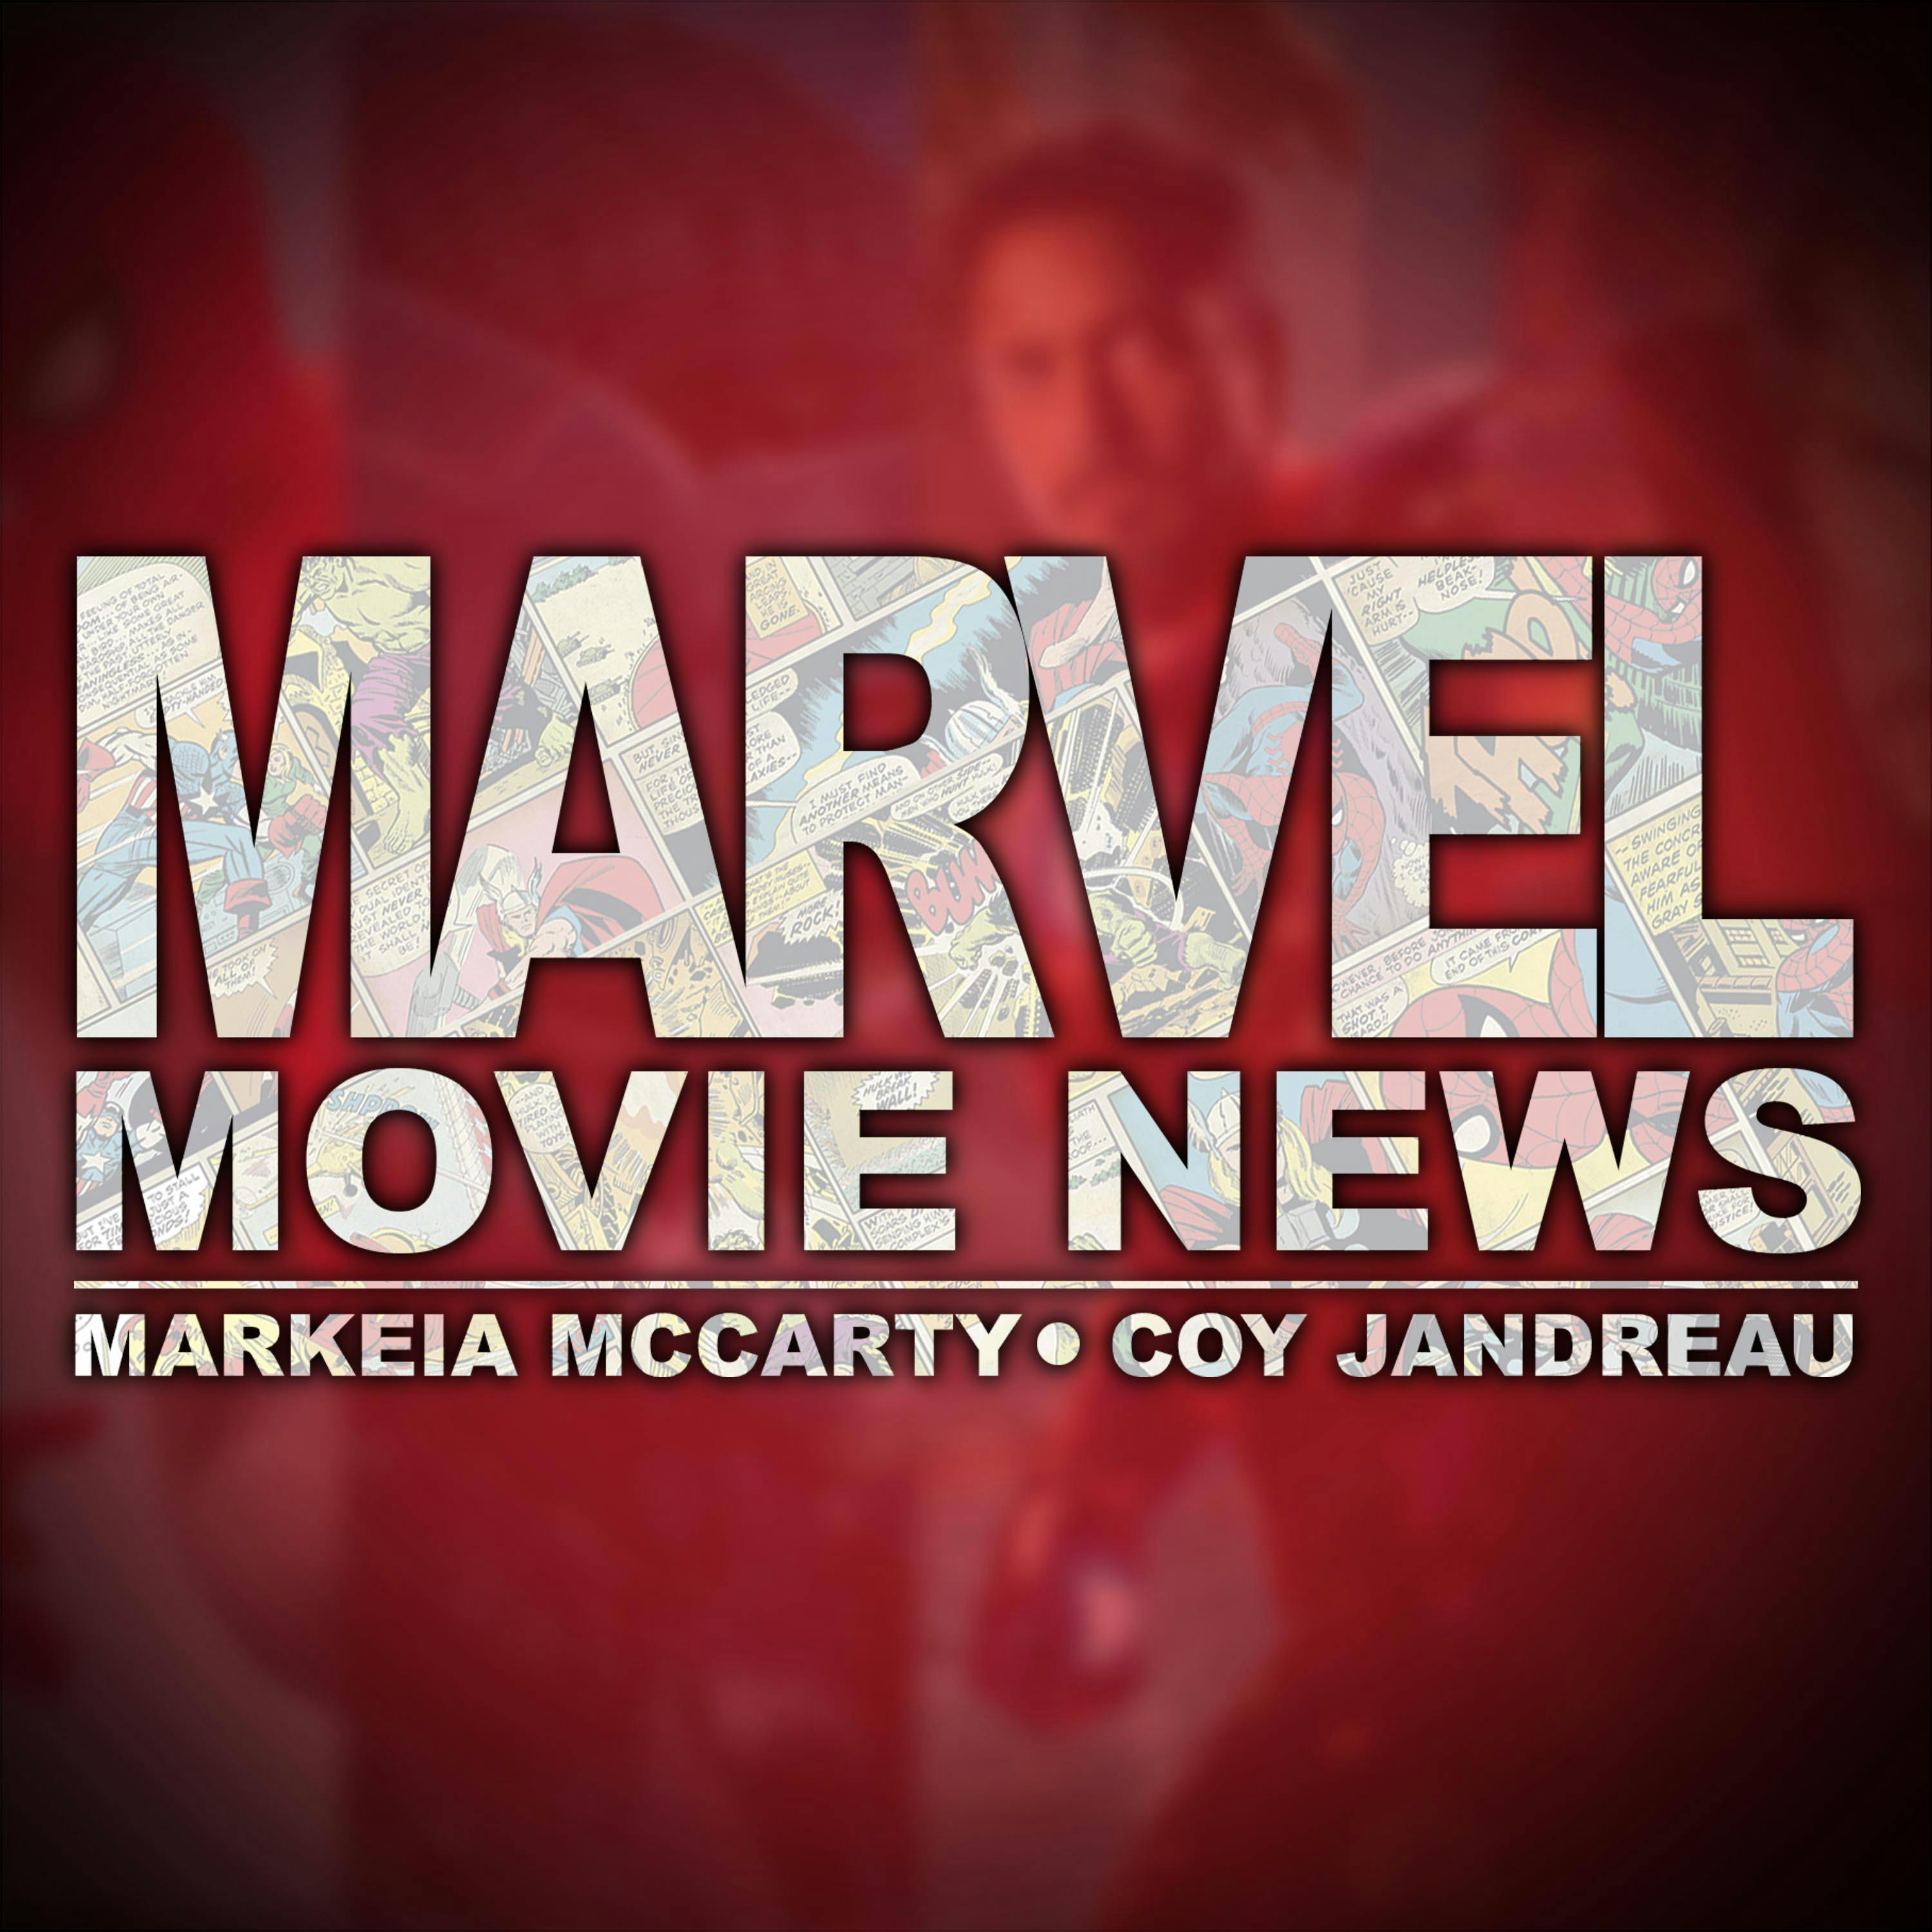 Brie Larson Up for Carol Danvers, Namor Returns and More! – Marvel Movie News Ep 85